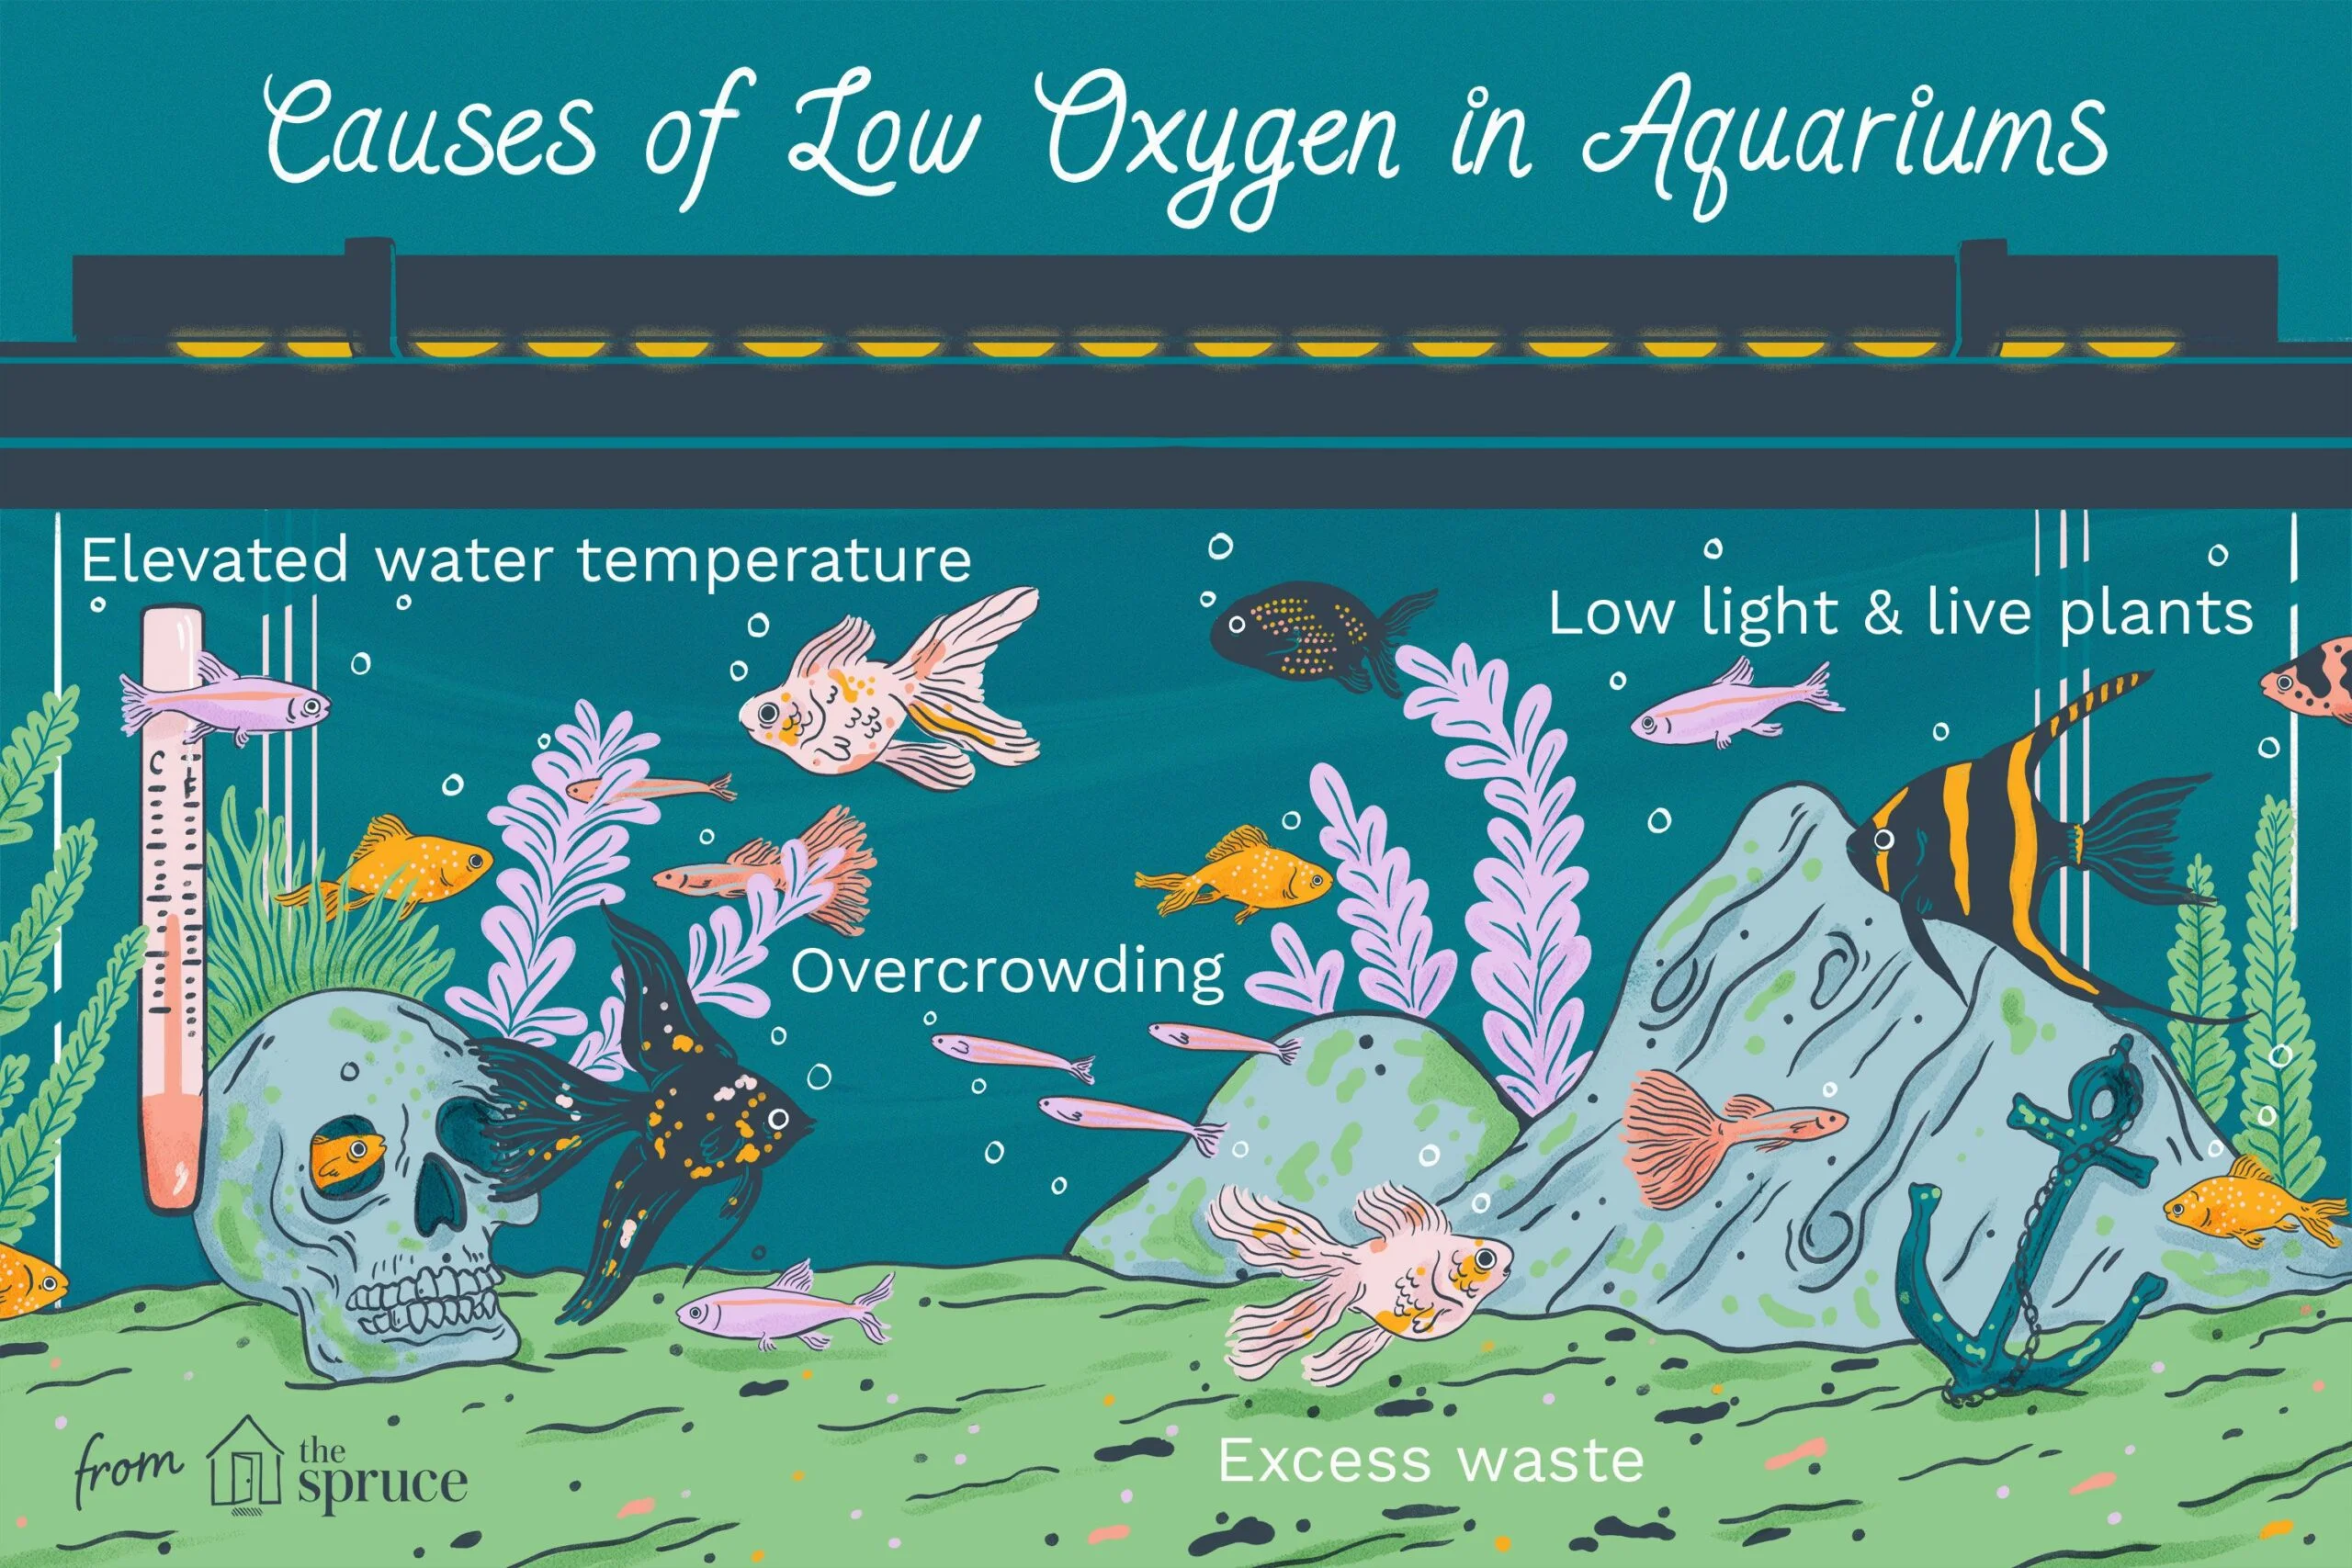 https://aquariumia.com/how-do-i-know-if-my-tank-has-too-much-oxygen/